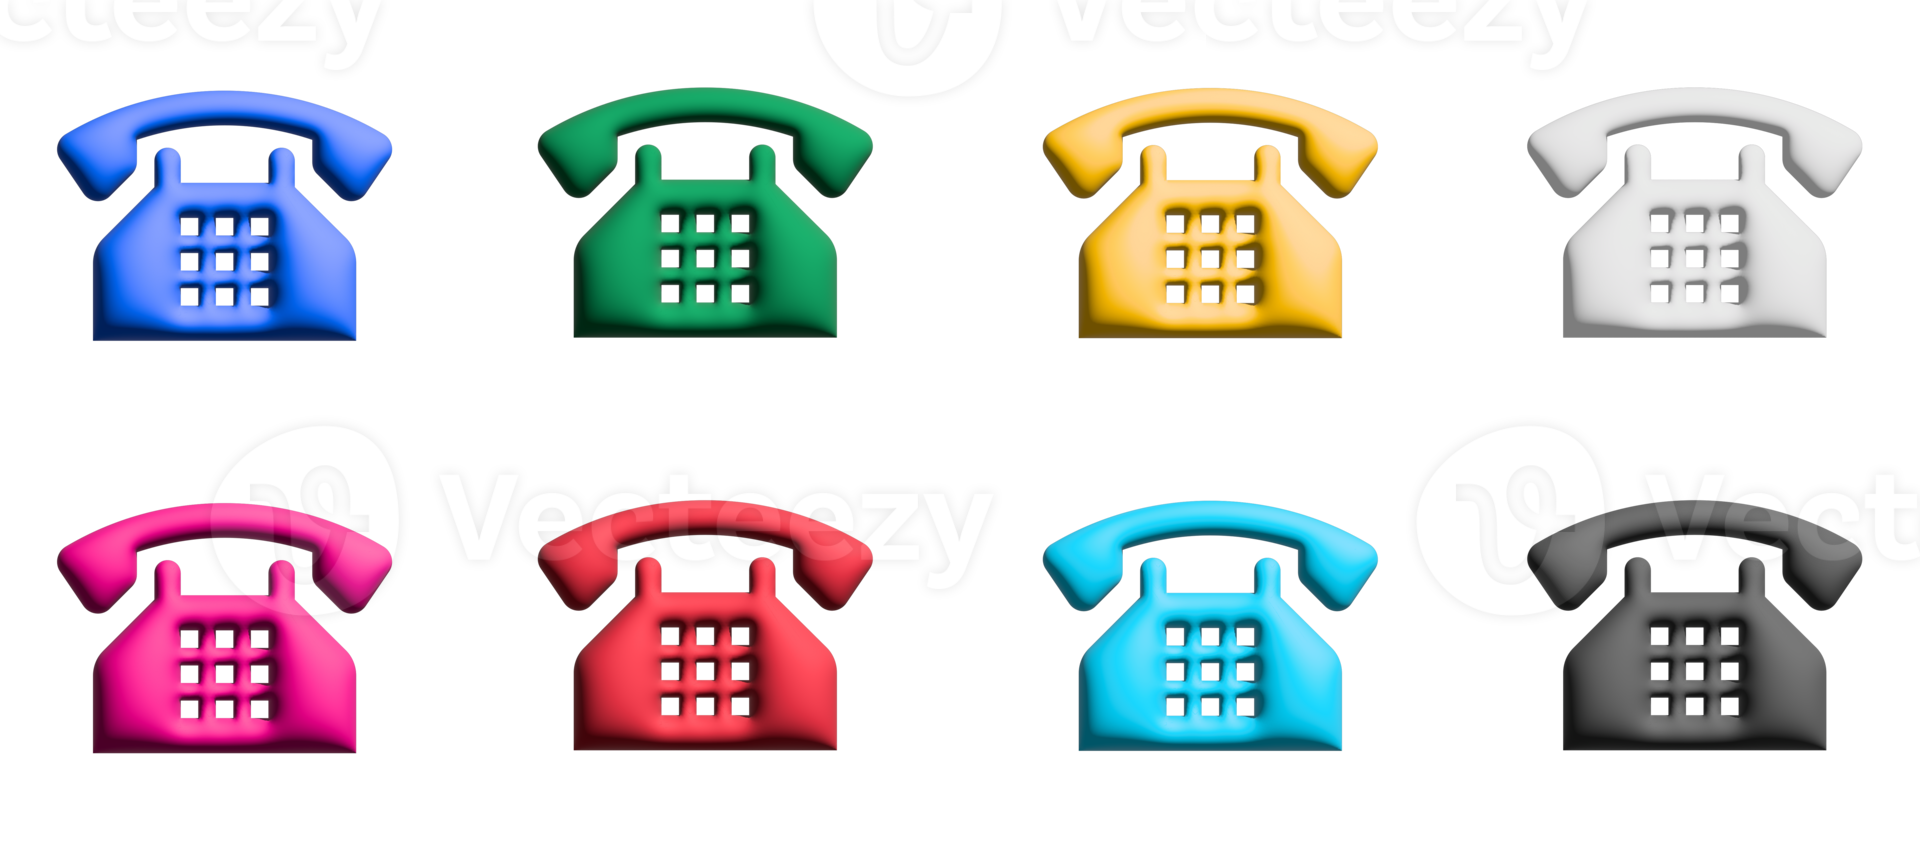 Phone icon set, colorful symbols graphic elements png